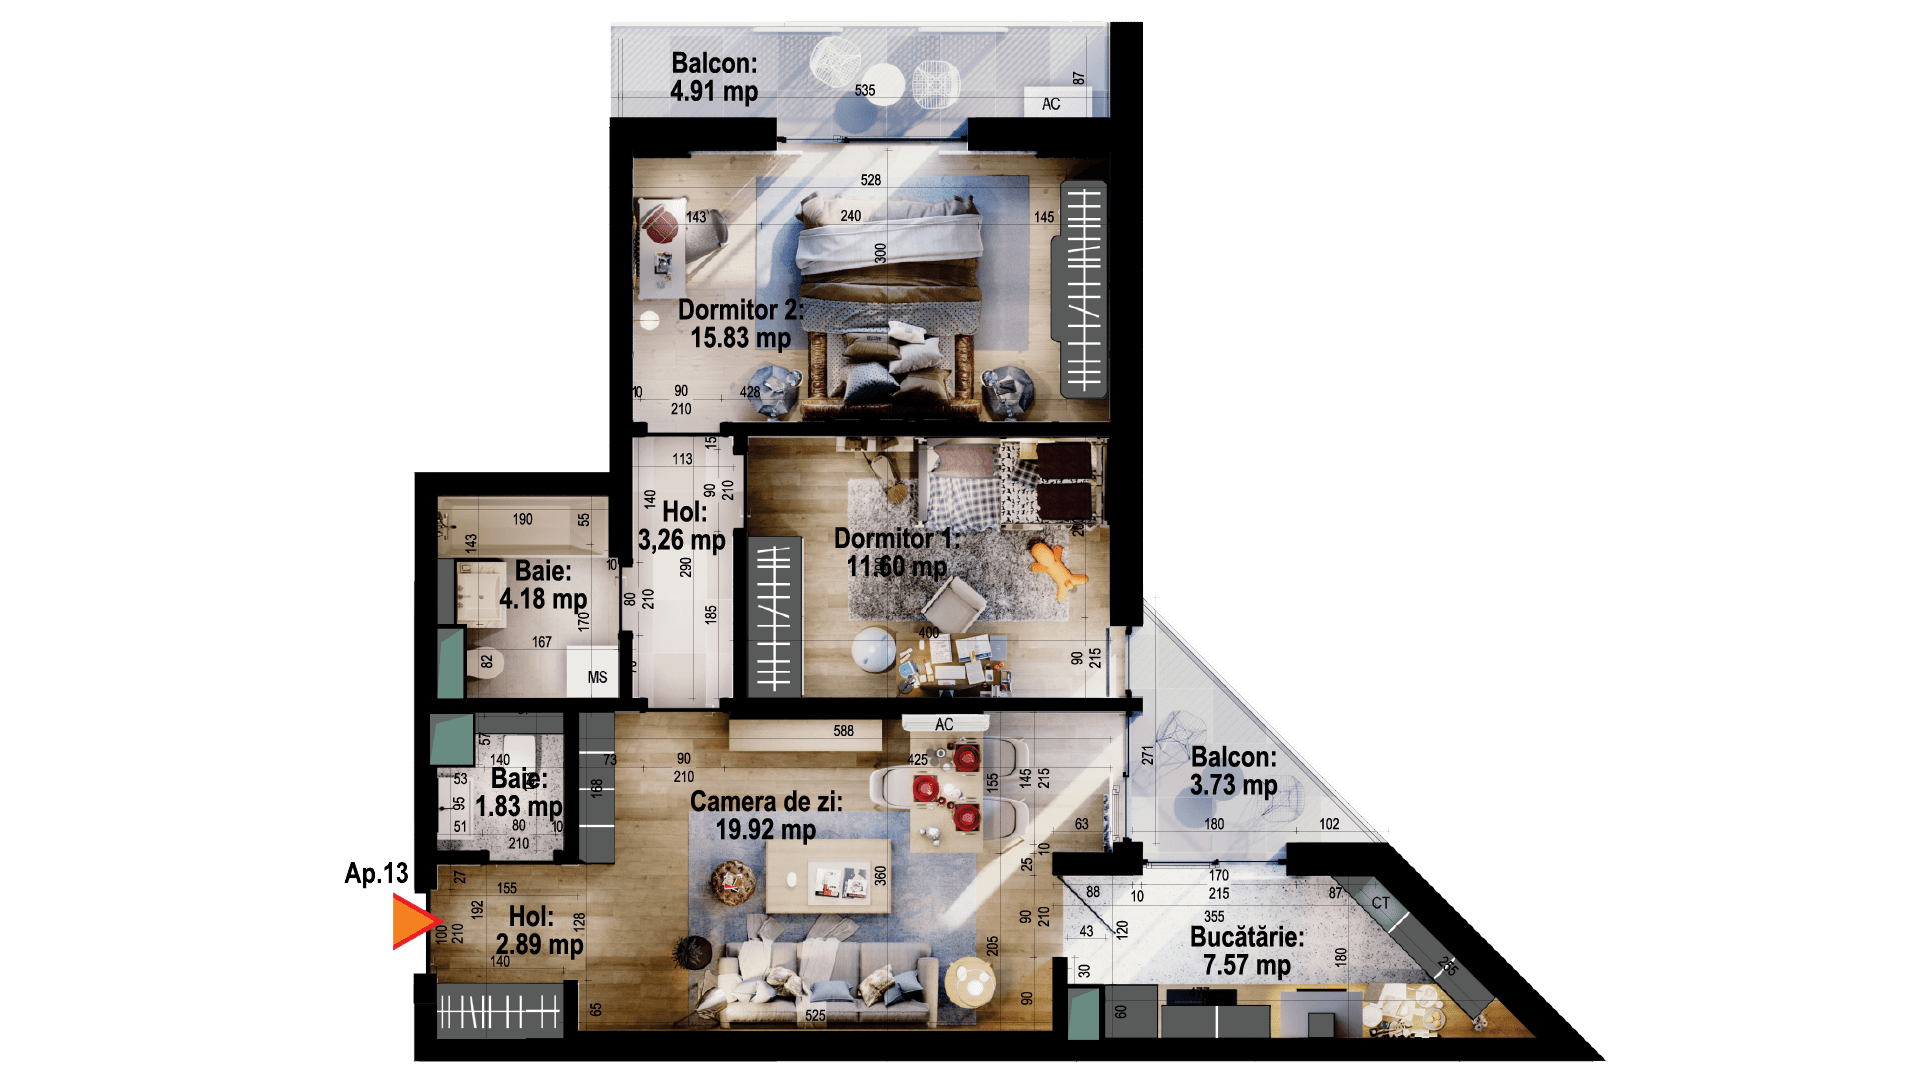 Apartment Plan 13